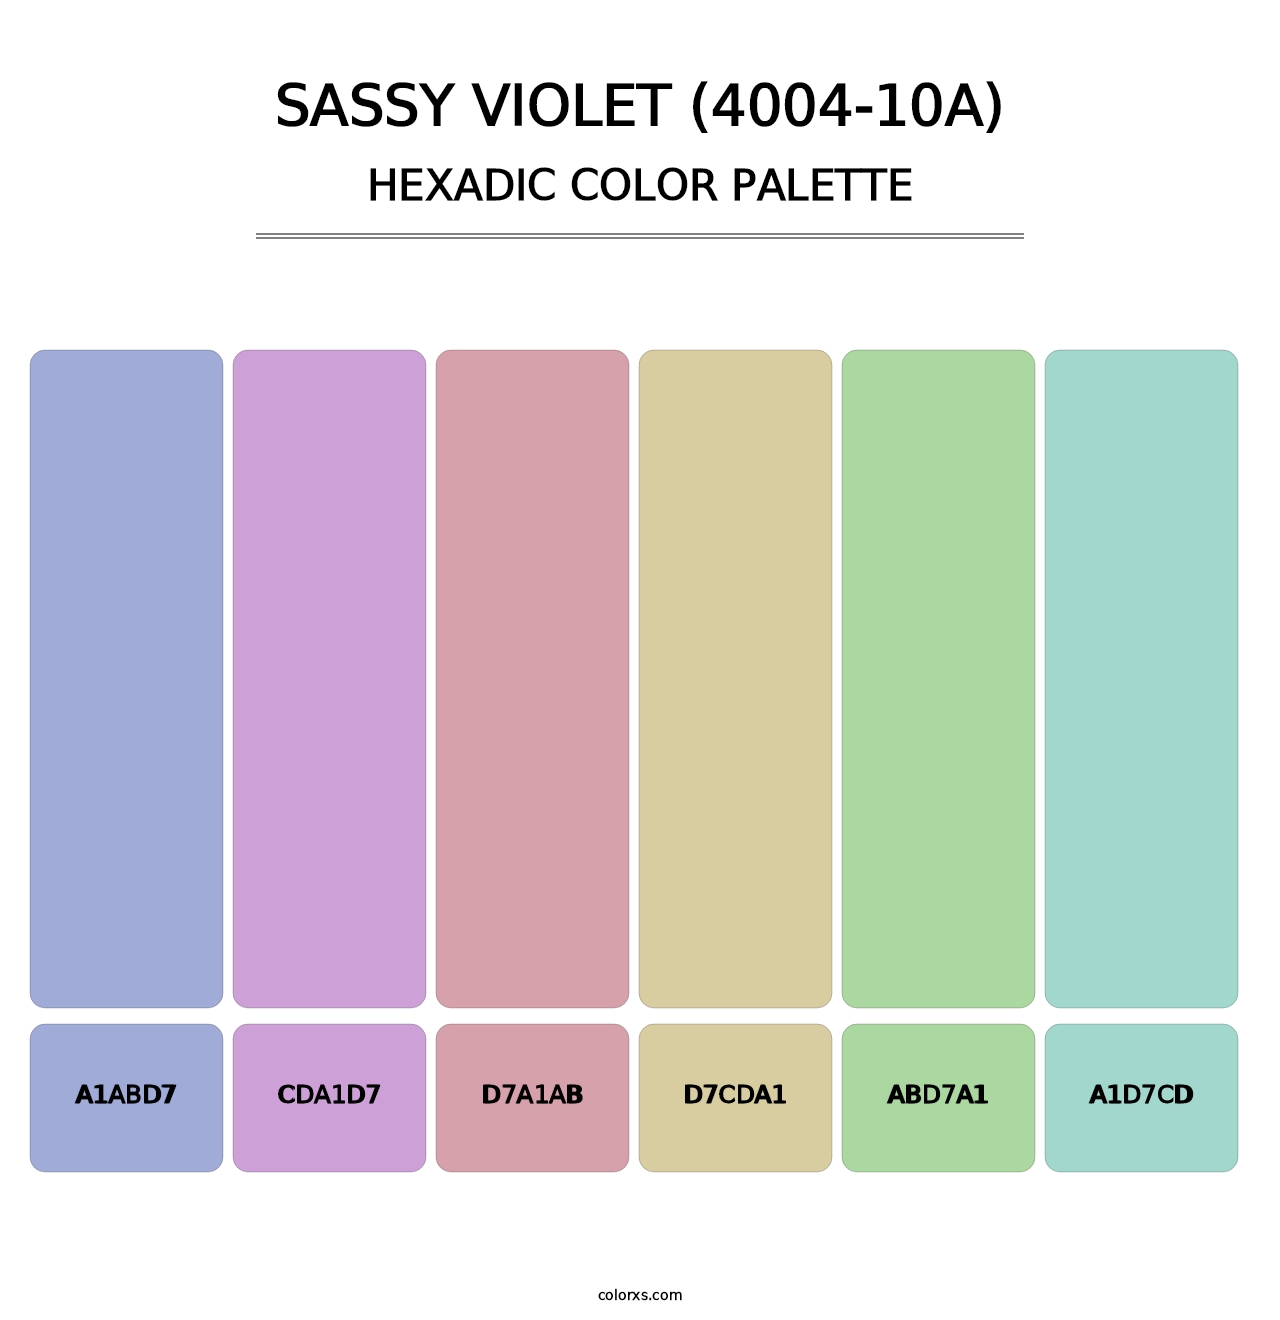 Sassy Violet (4004-10A) - Hexadic Color Palette